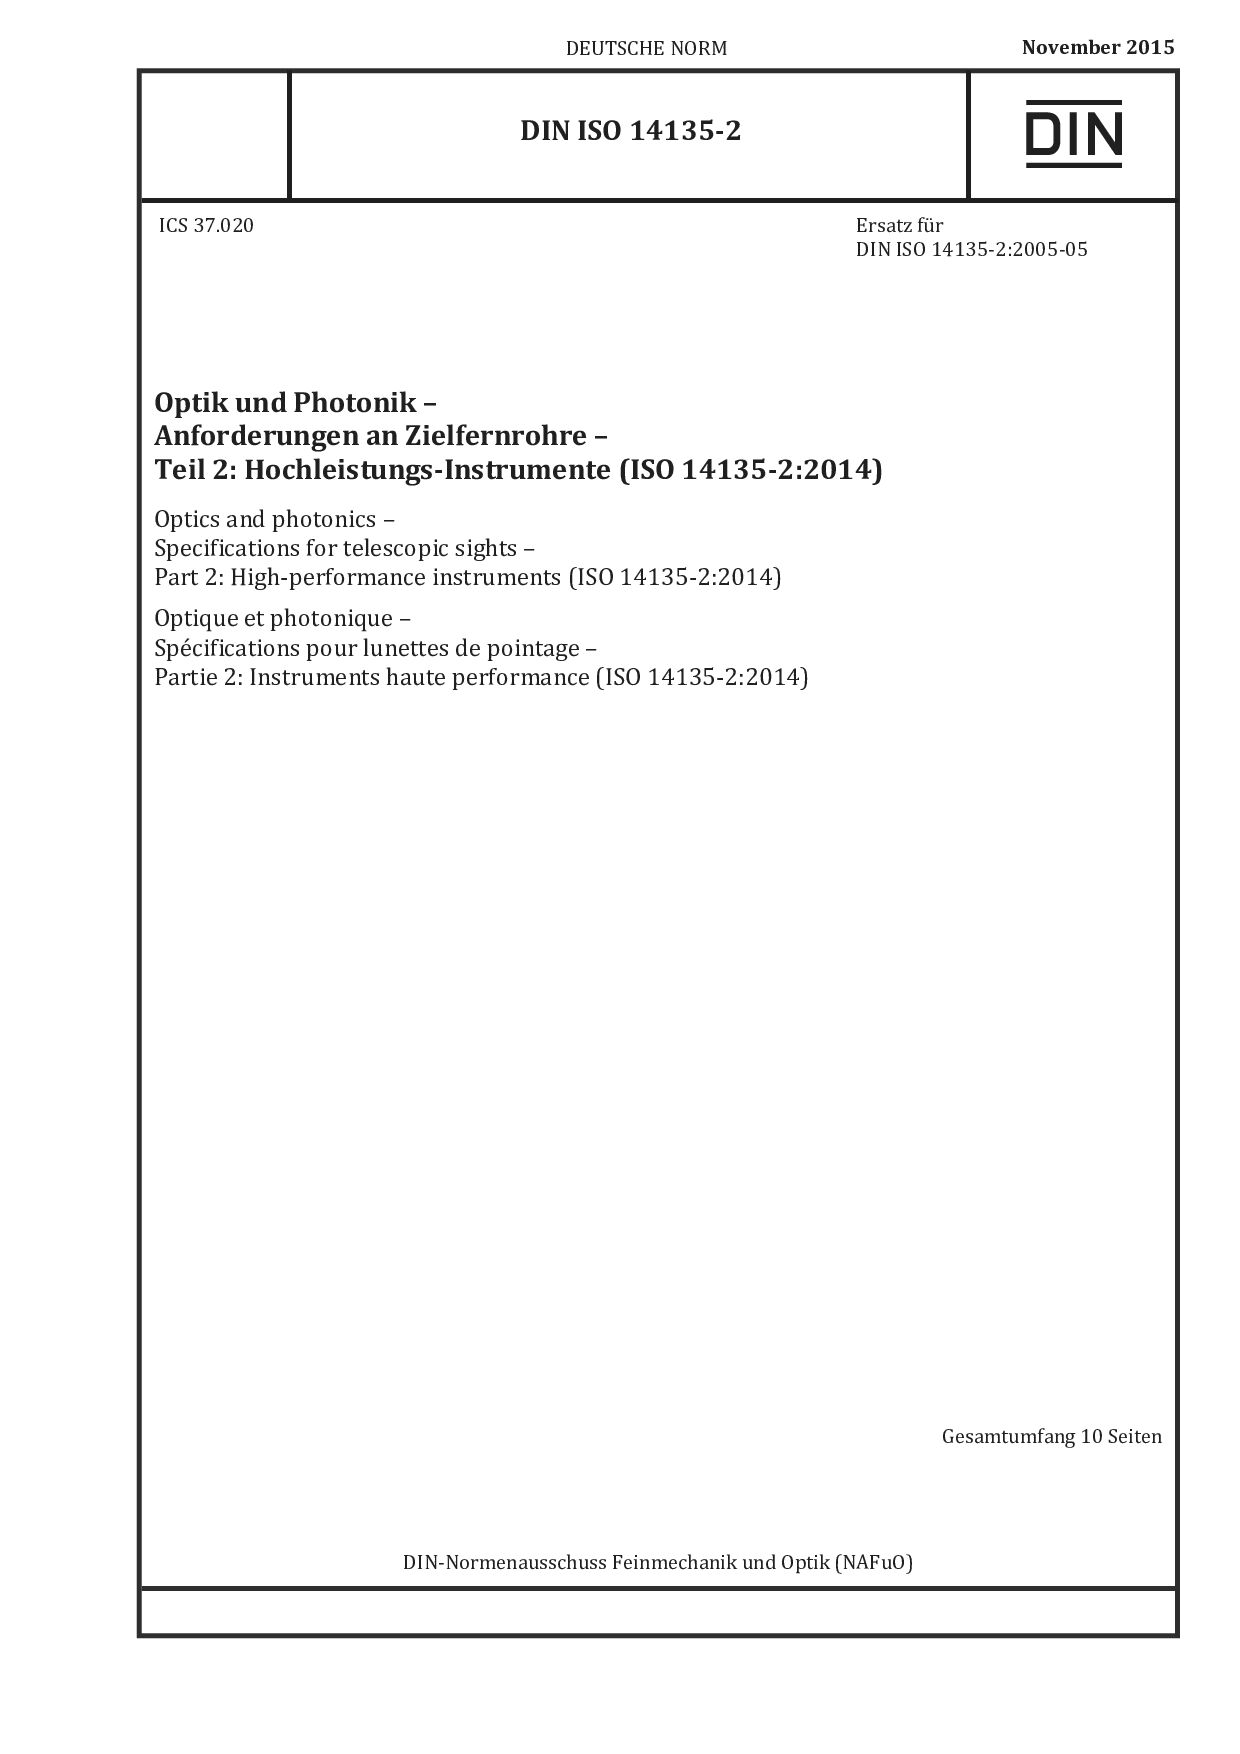 DIN ISO 14135-2:2015